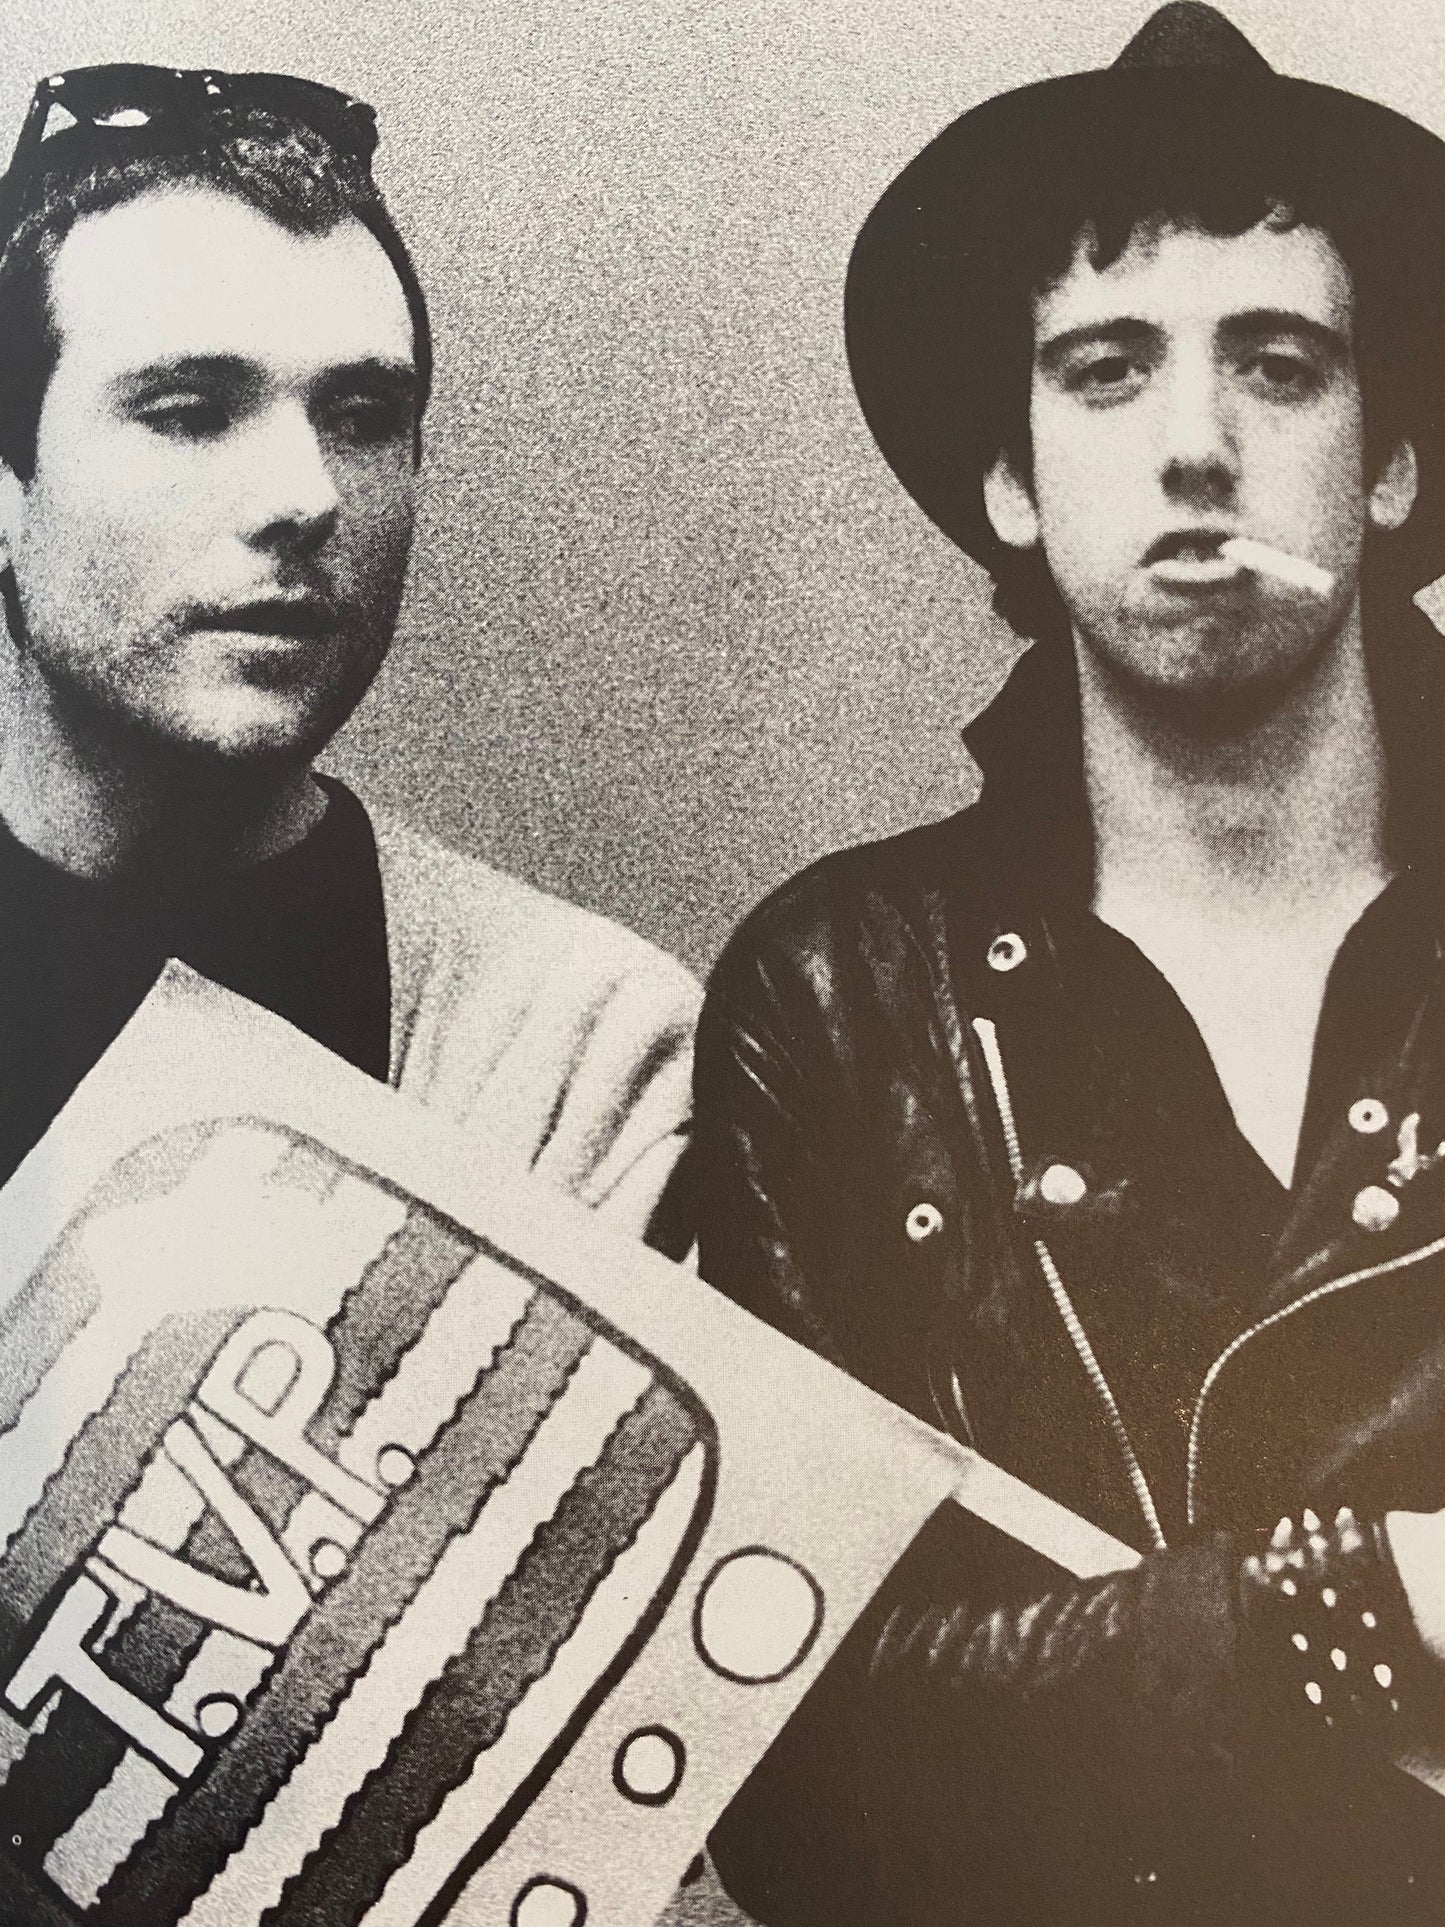 The Clash: A Visual Documentary (1983)